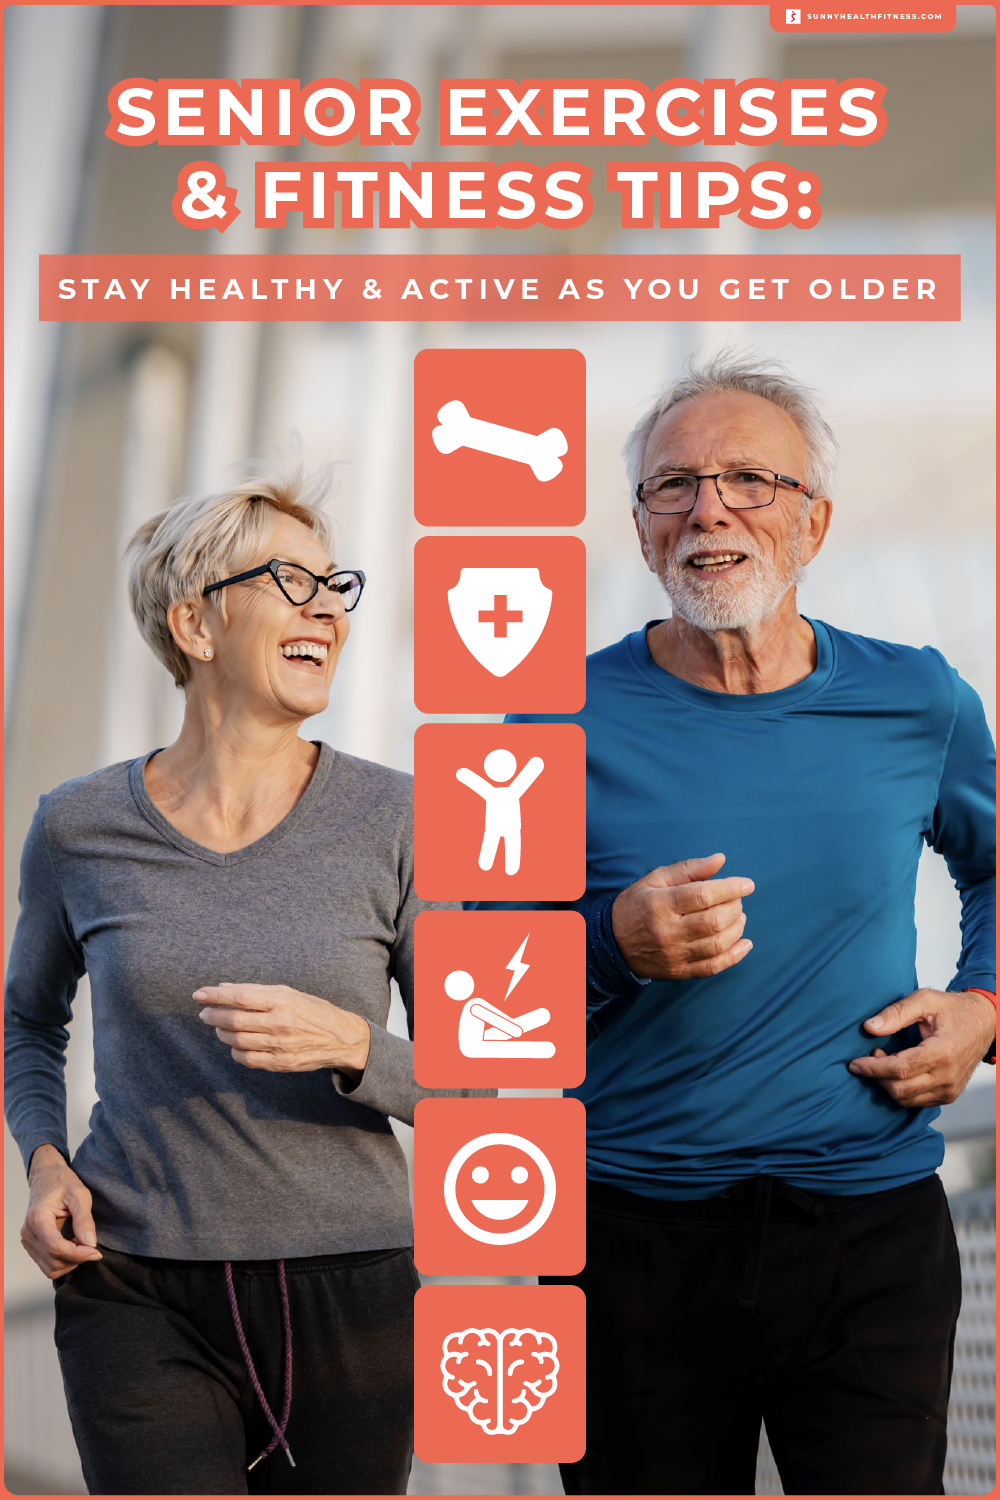 Senior Exercises & Fitness Tips Infographic